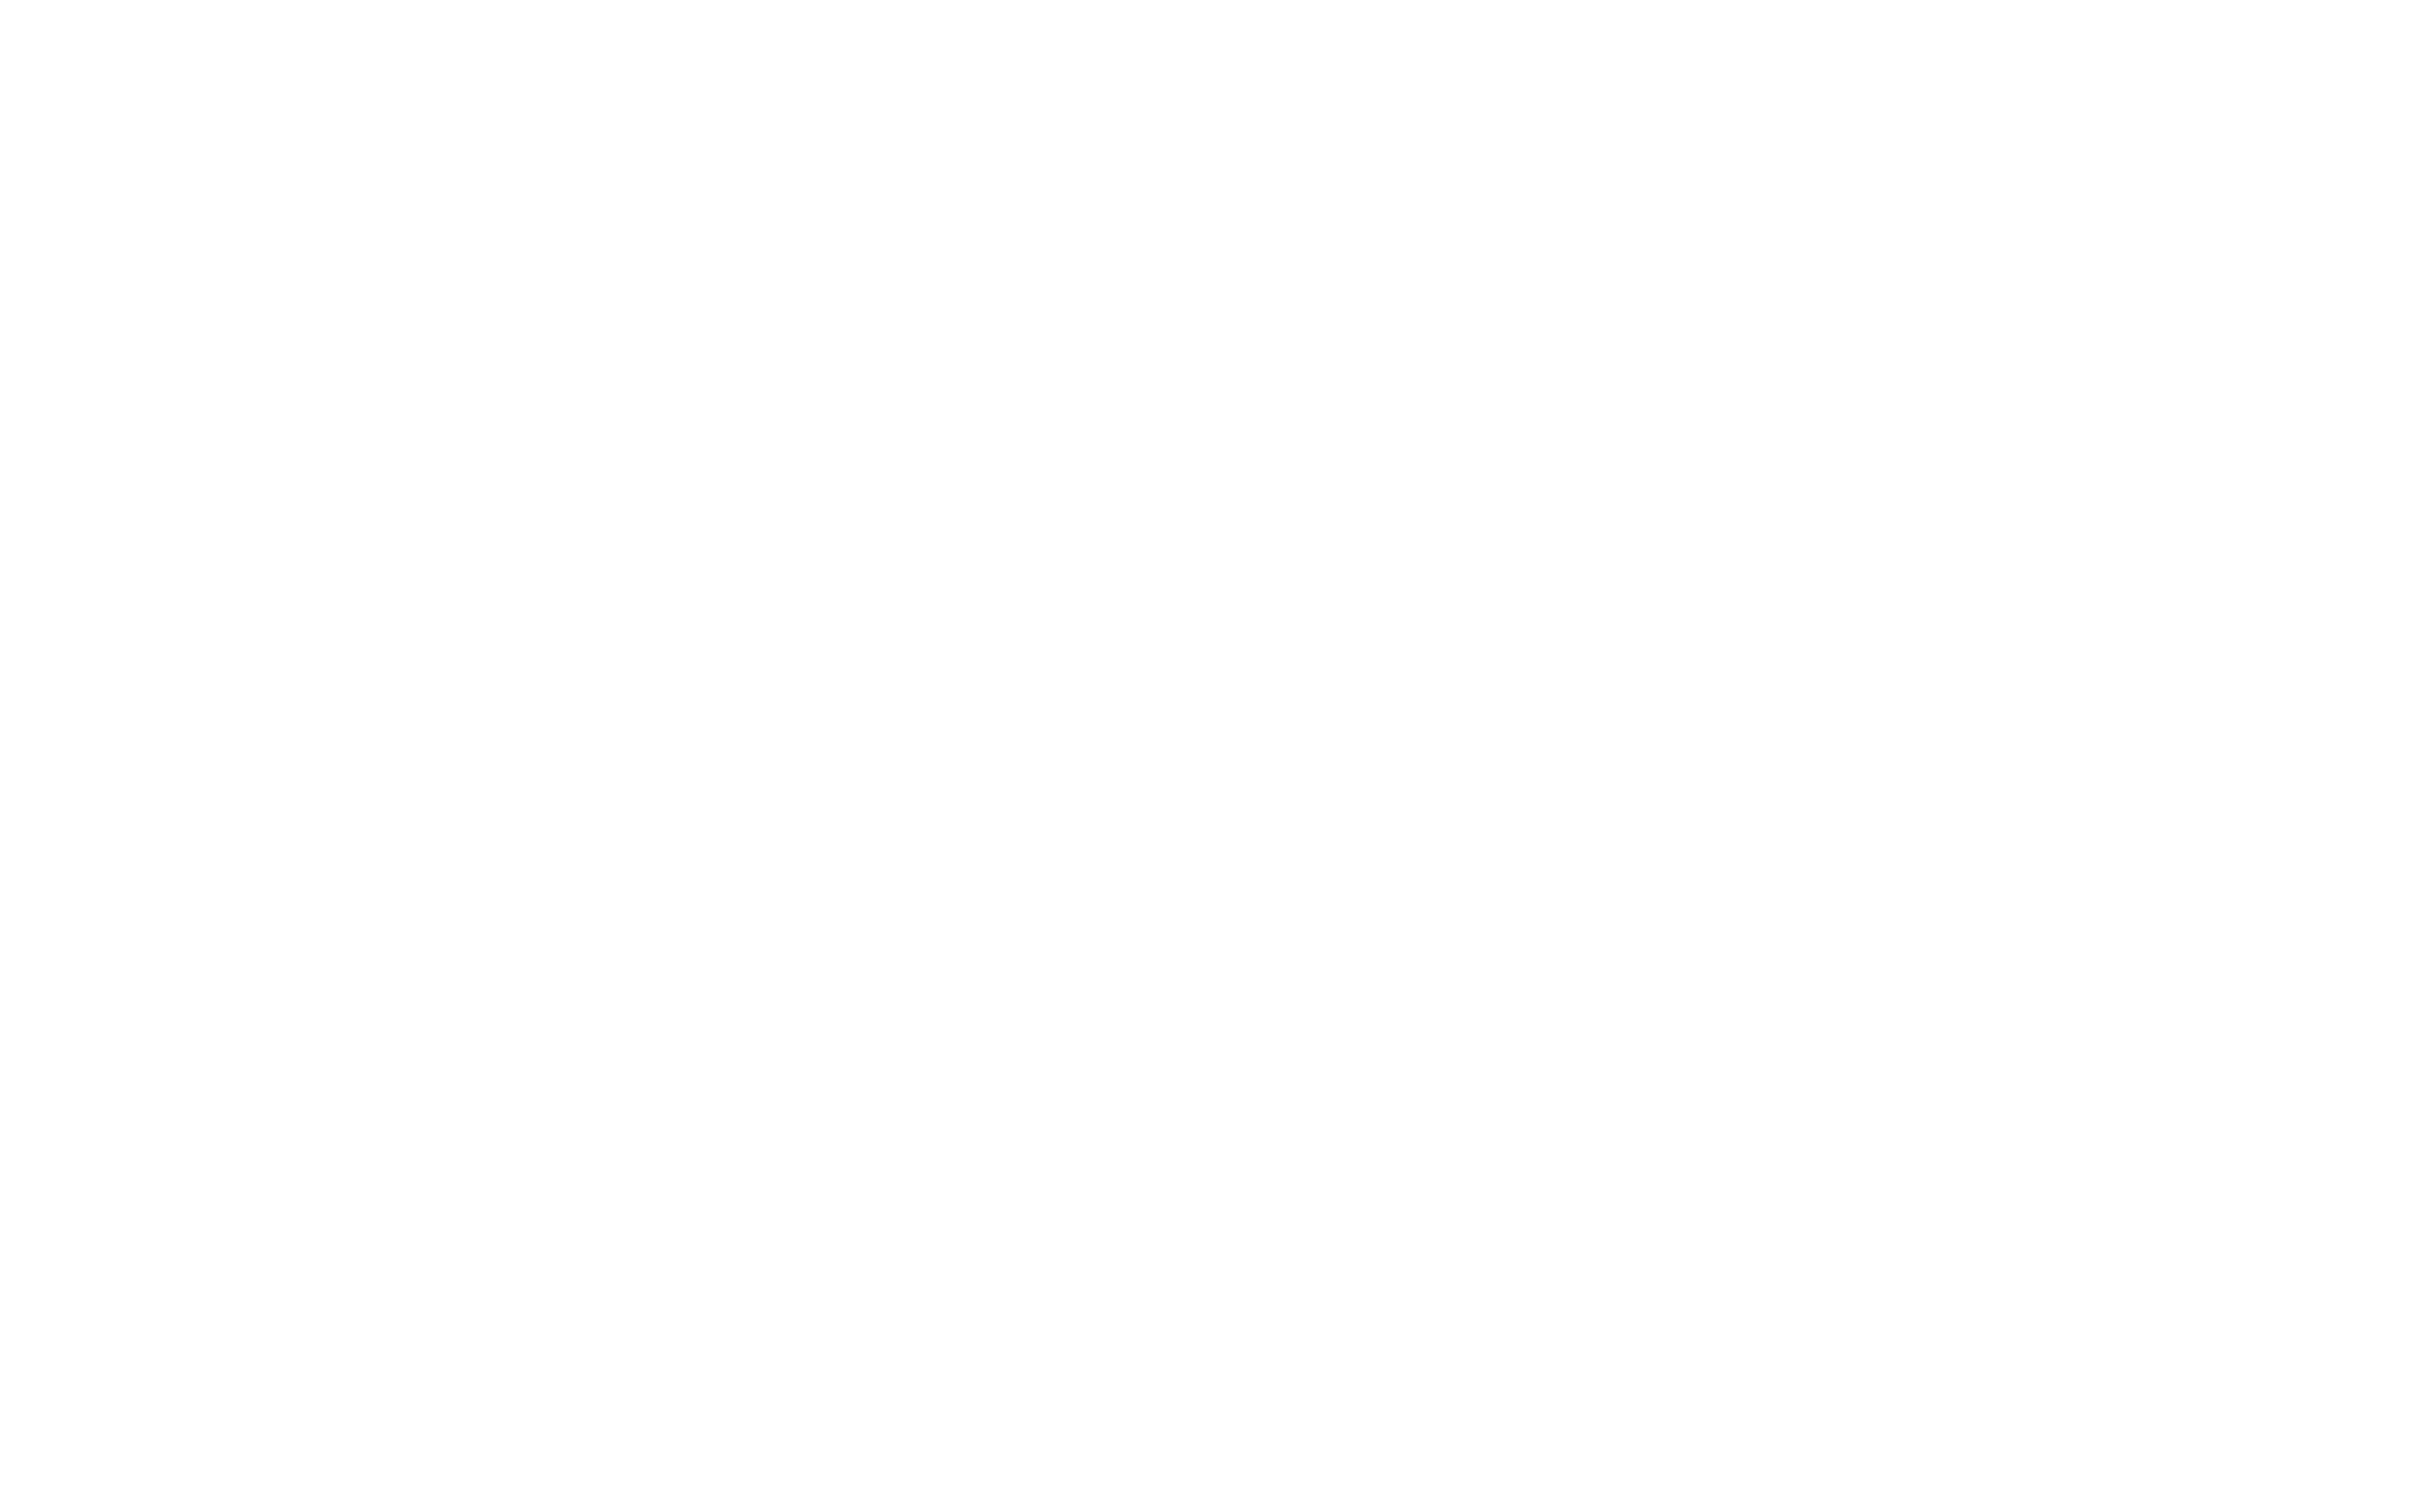 CCMM logo